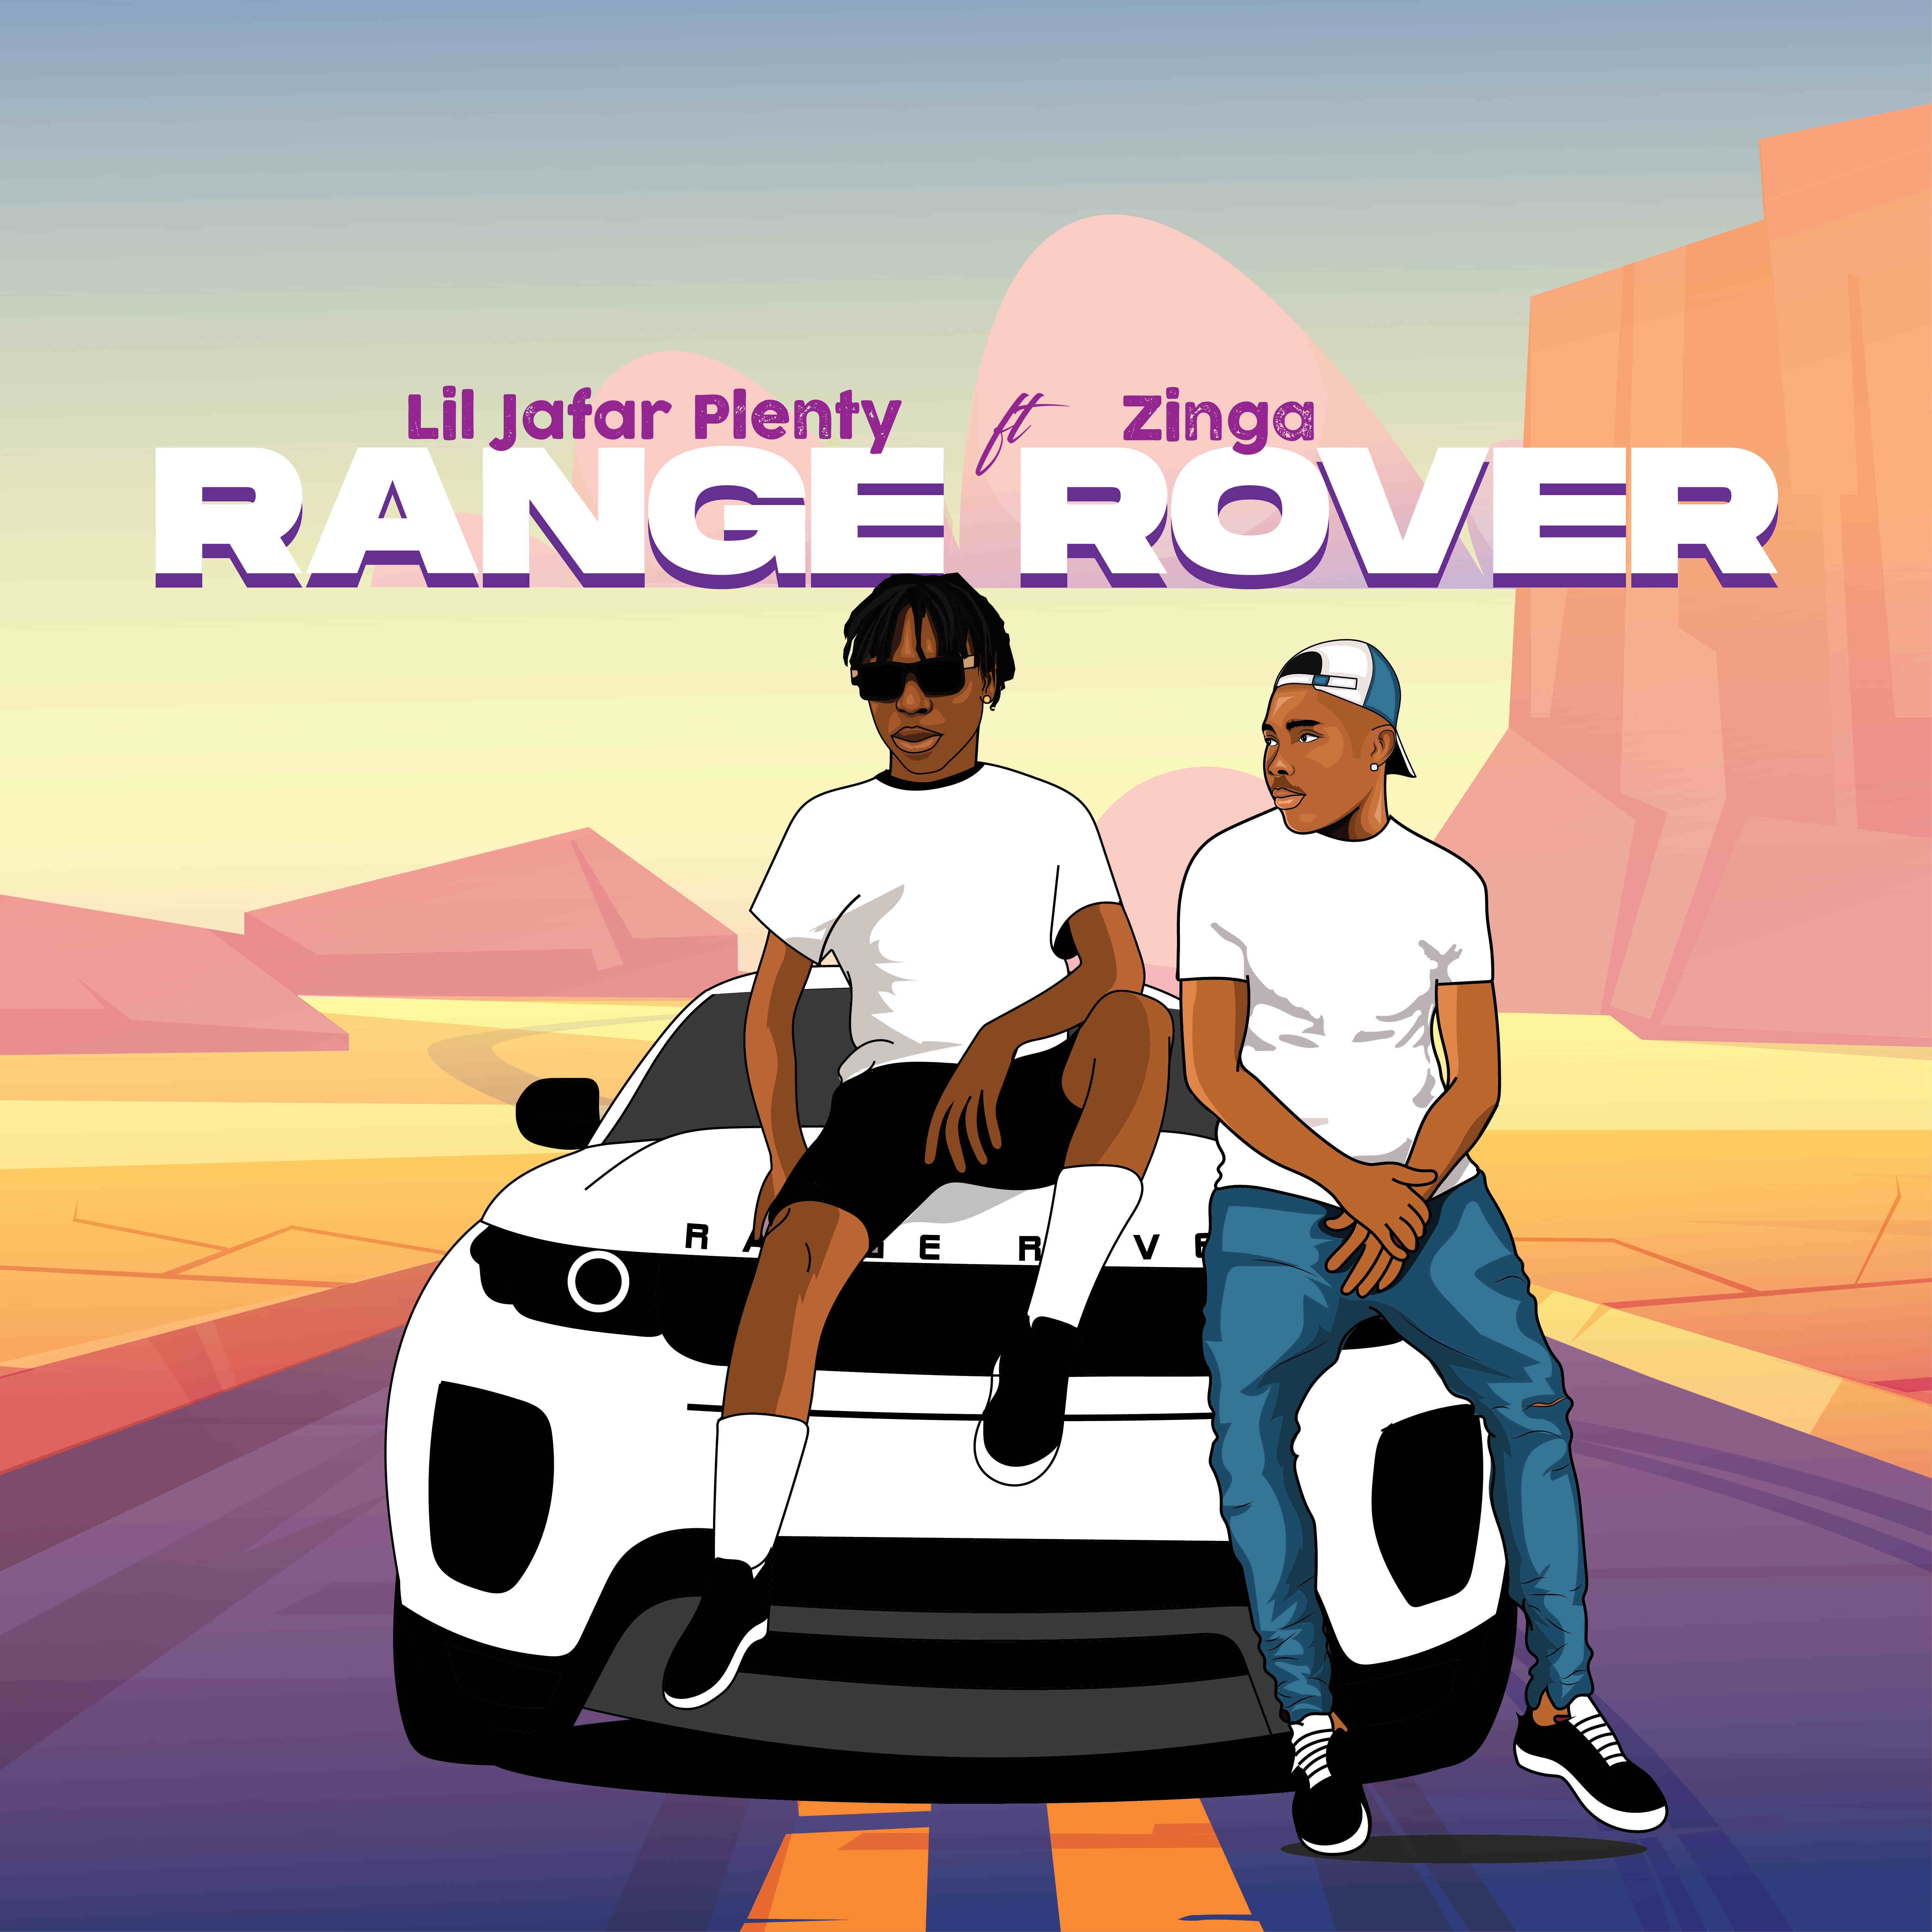 Lil Jaf Plenty Ft Zinga Range Rover